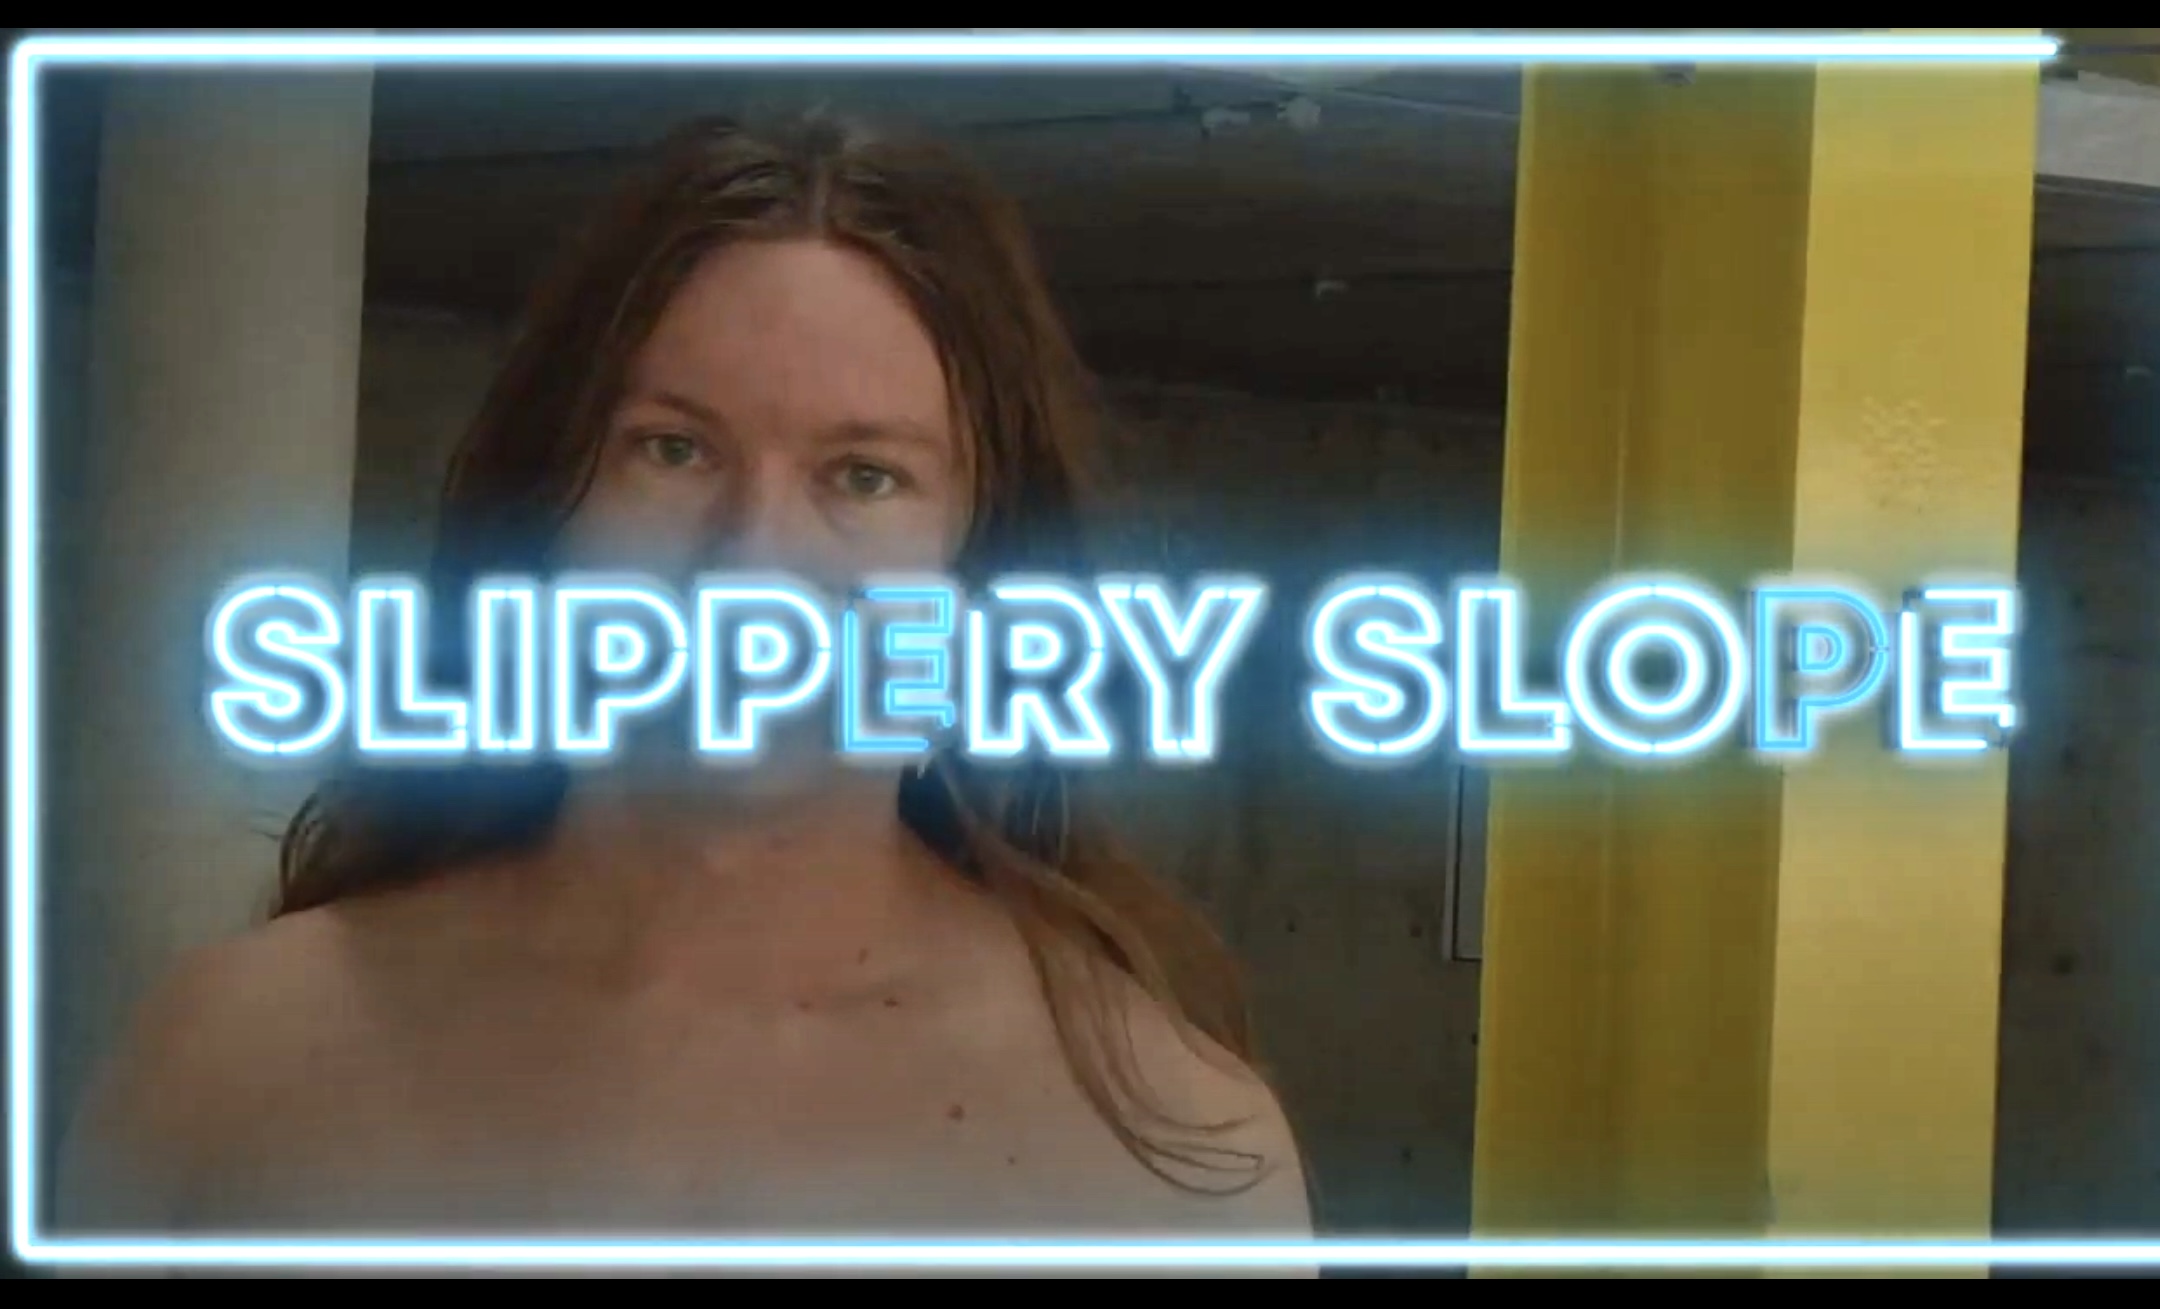 “Slippery Slope” by Jeremy Soderburg